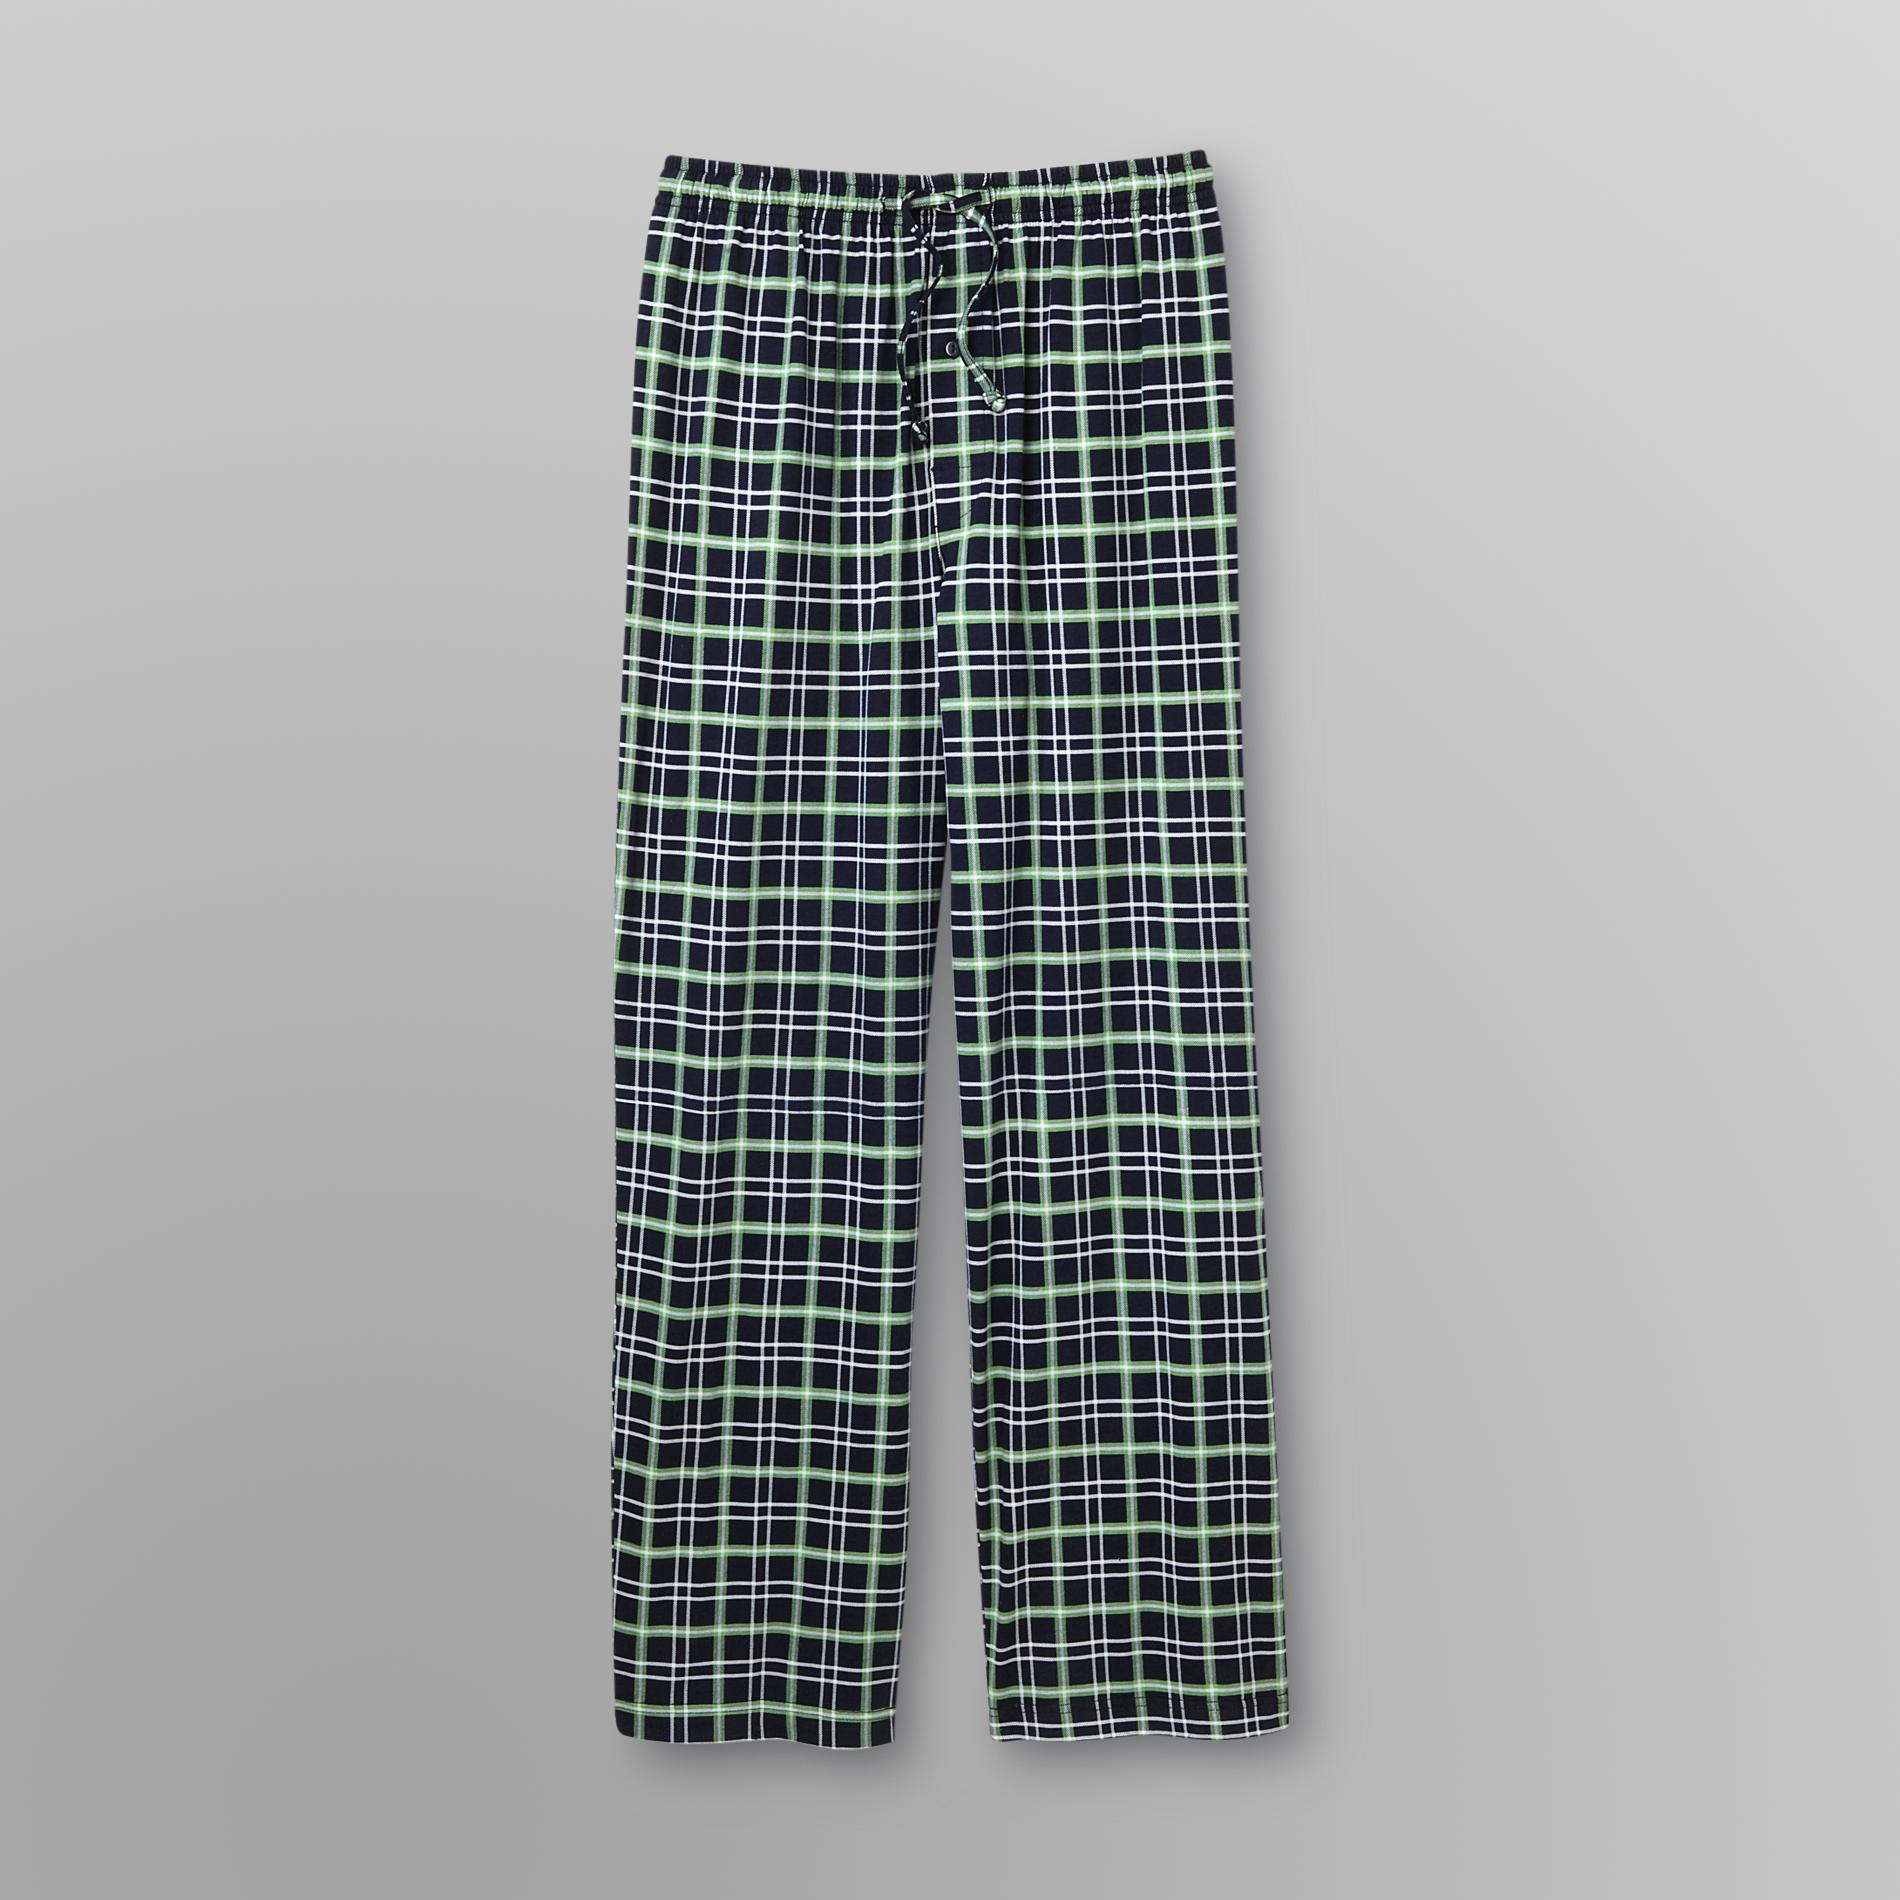 Covington Men's Big & Tall Pajama Pants - Plaid